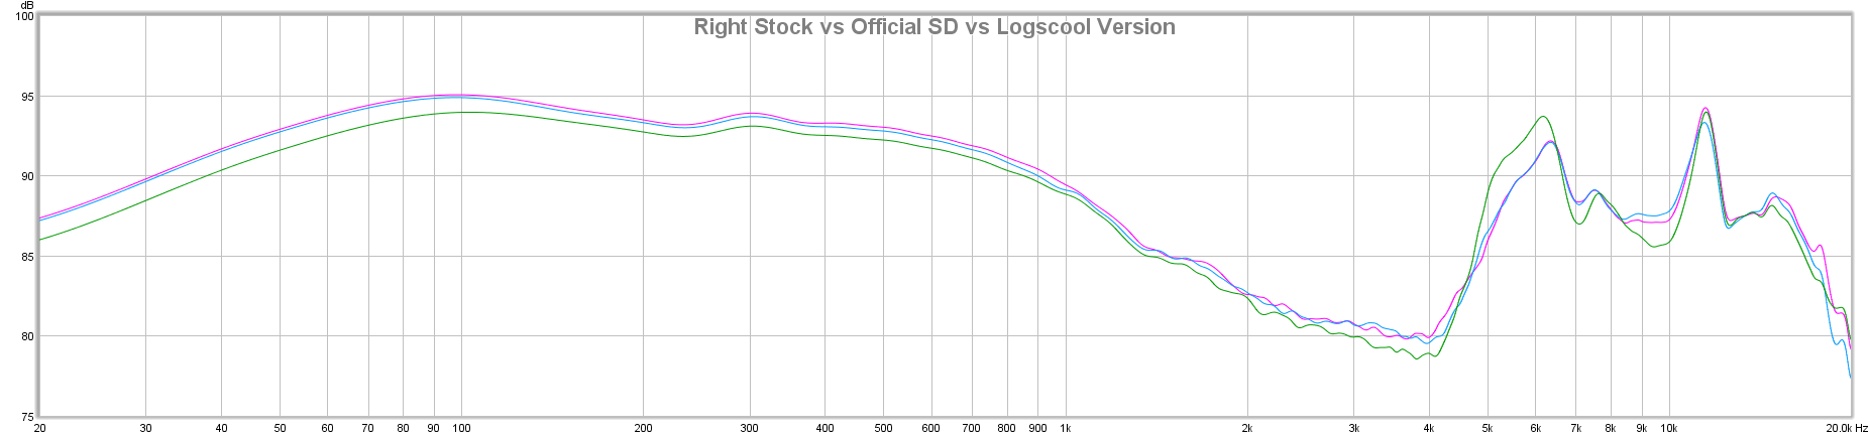 Right stock vs official SD vs Logscool Version.jpg